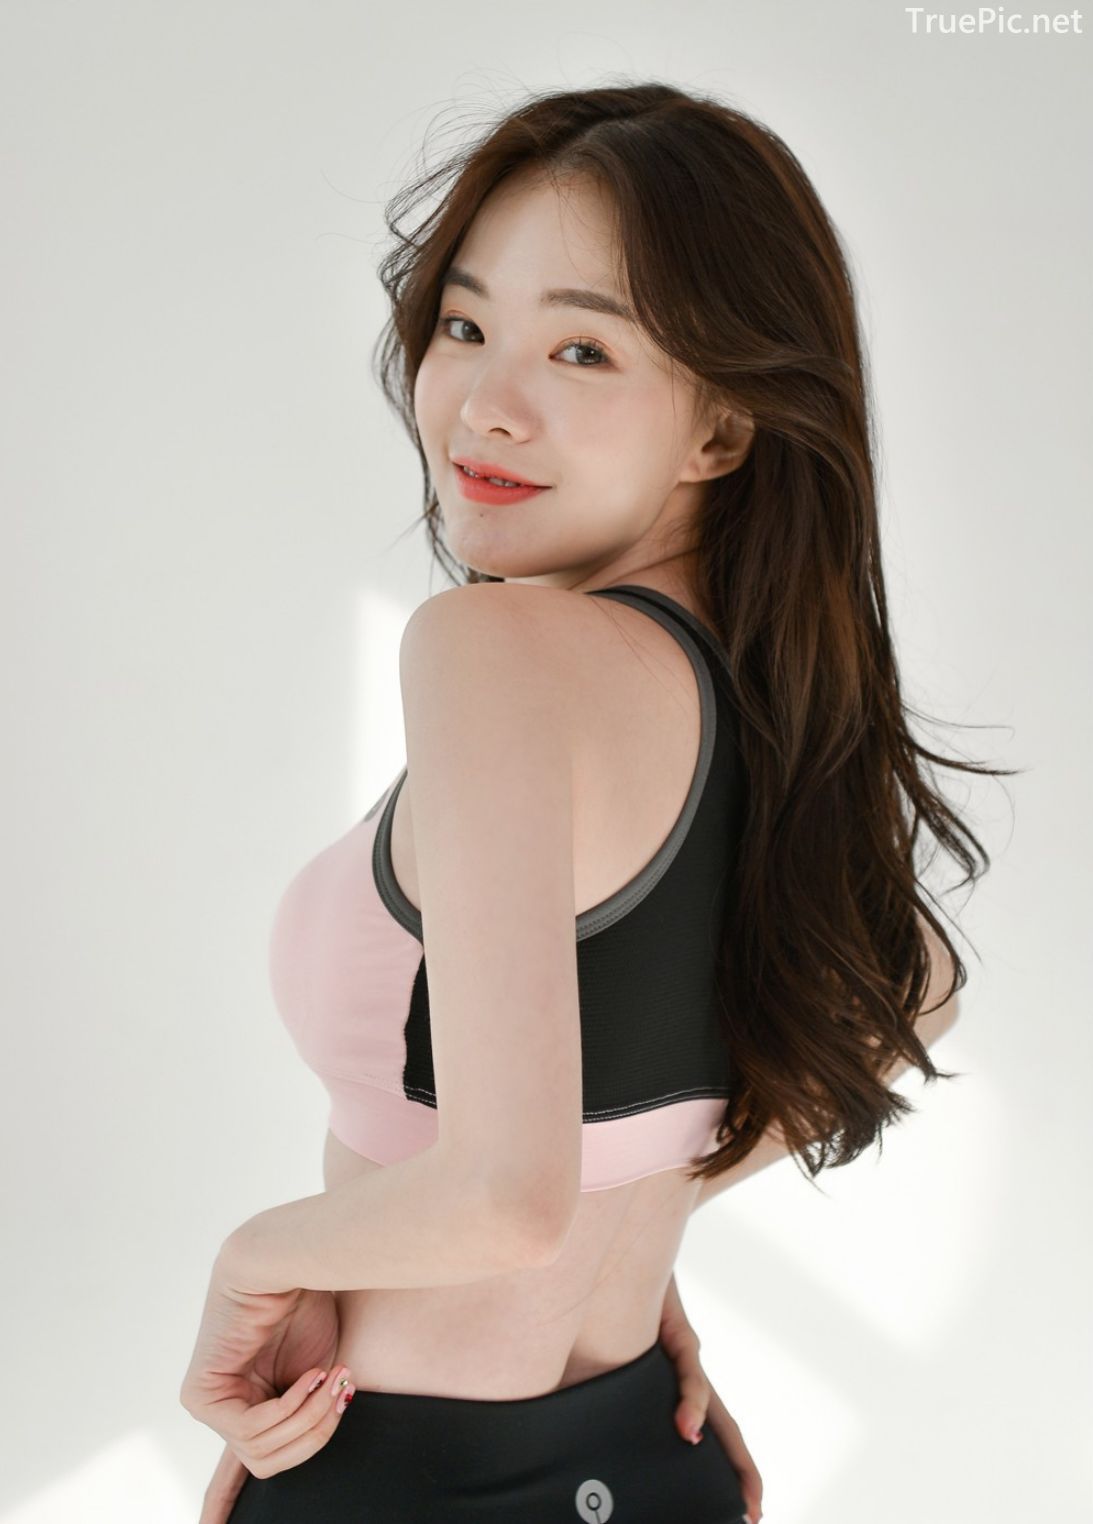 Korean Lingerie Queen - Haneul - Fitness Set Collection - TruePic.net - Picture 37